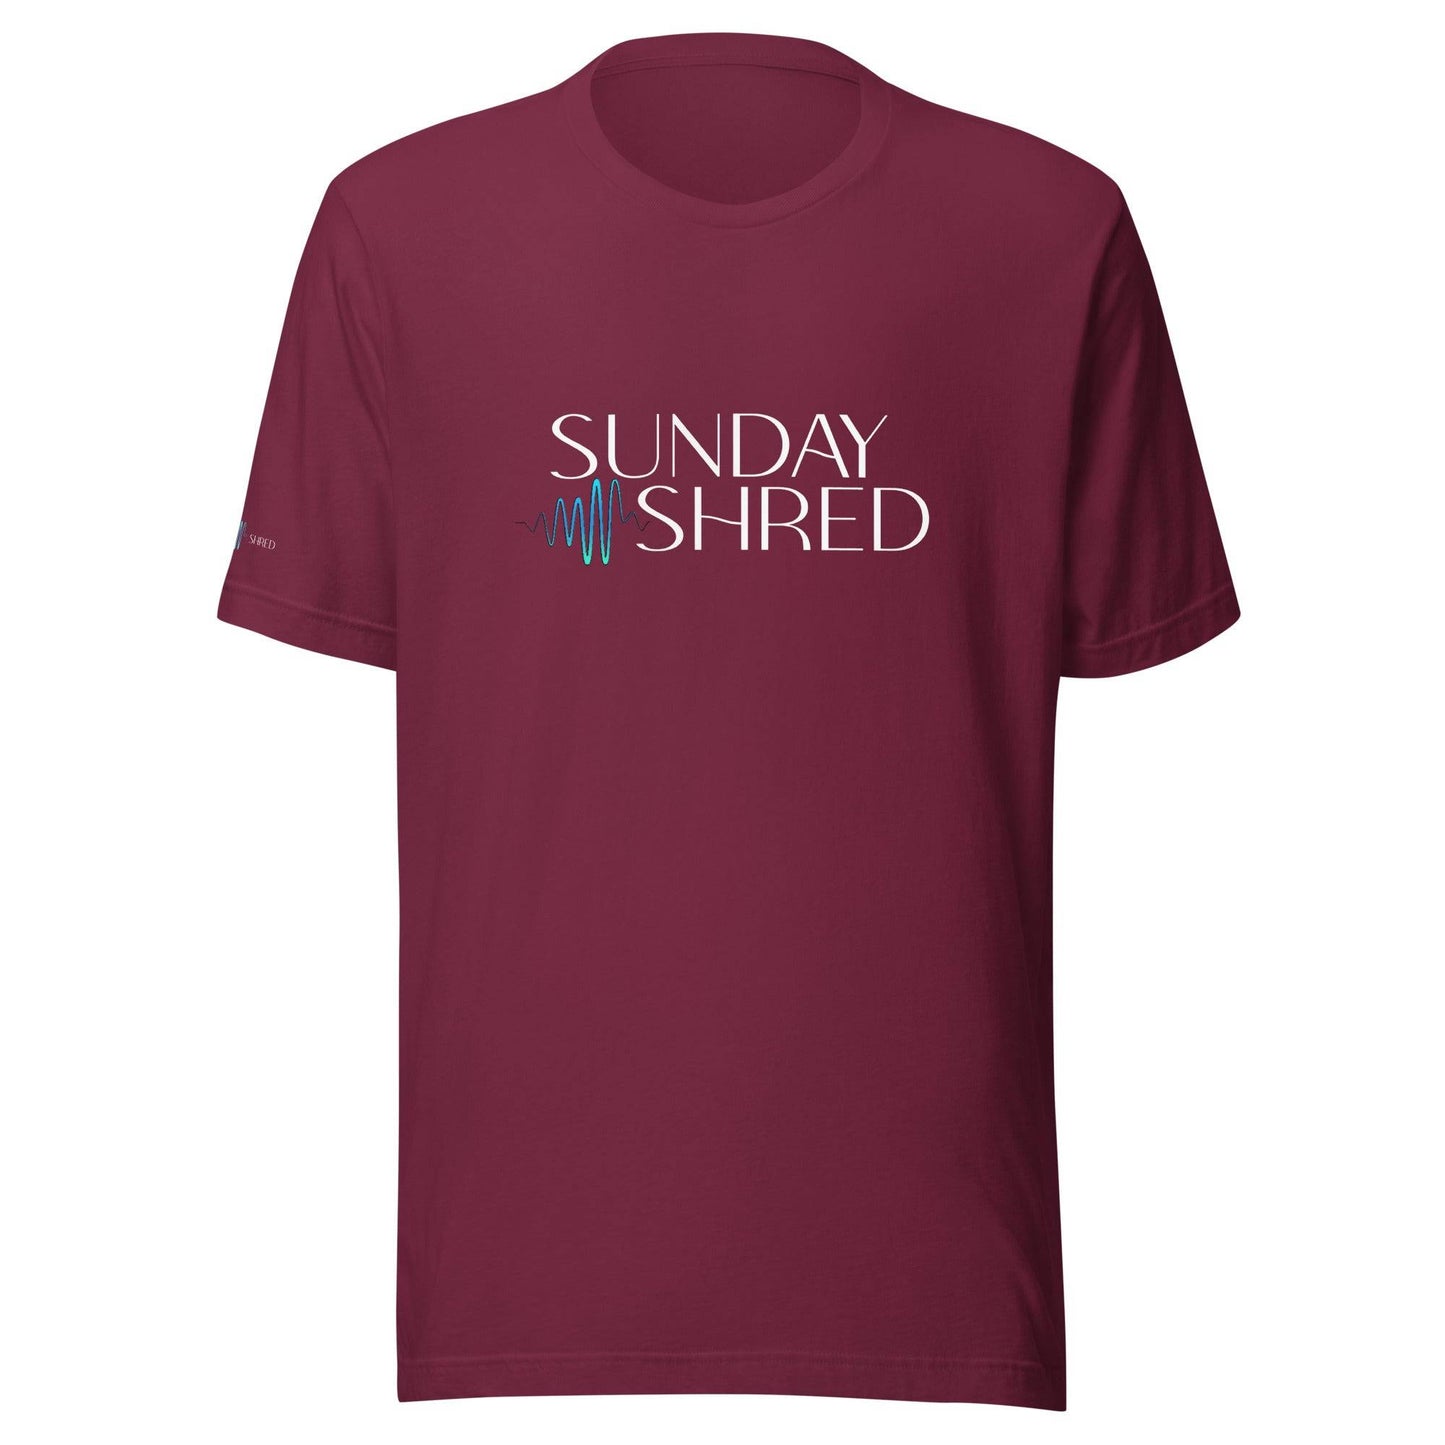 Sunday Shred - T-Shirt